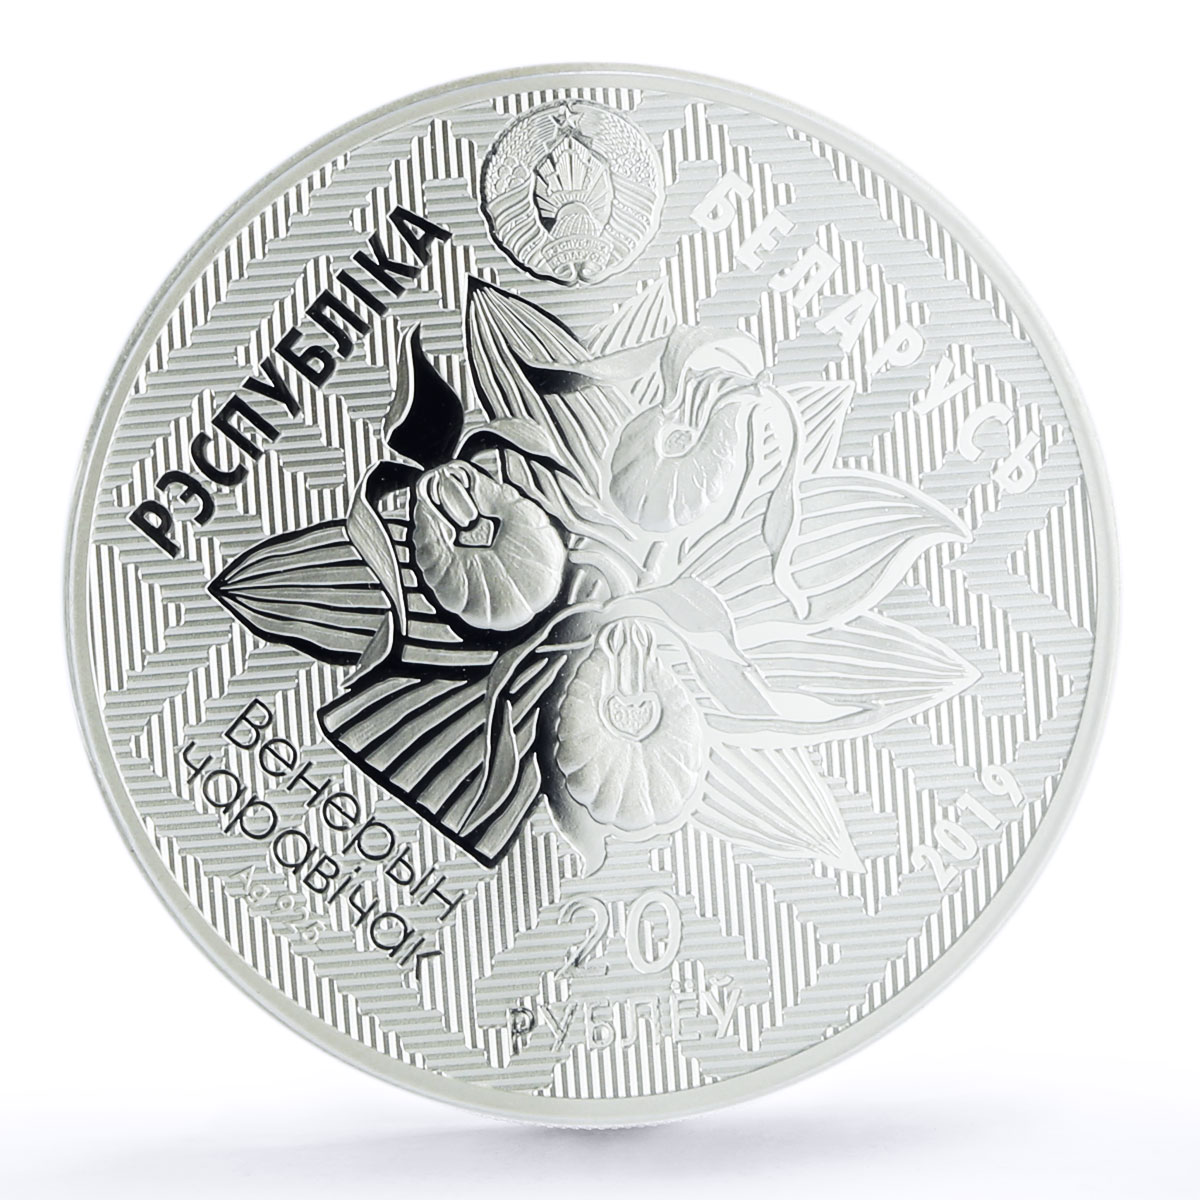 Belarus 20 ruble Zvanets reserve Bird Aquatic Warbler PR70 PCGS silver coin 2019